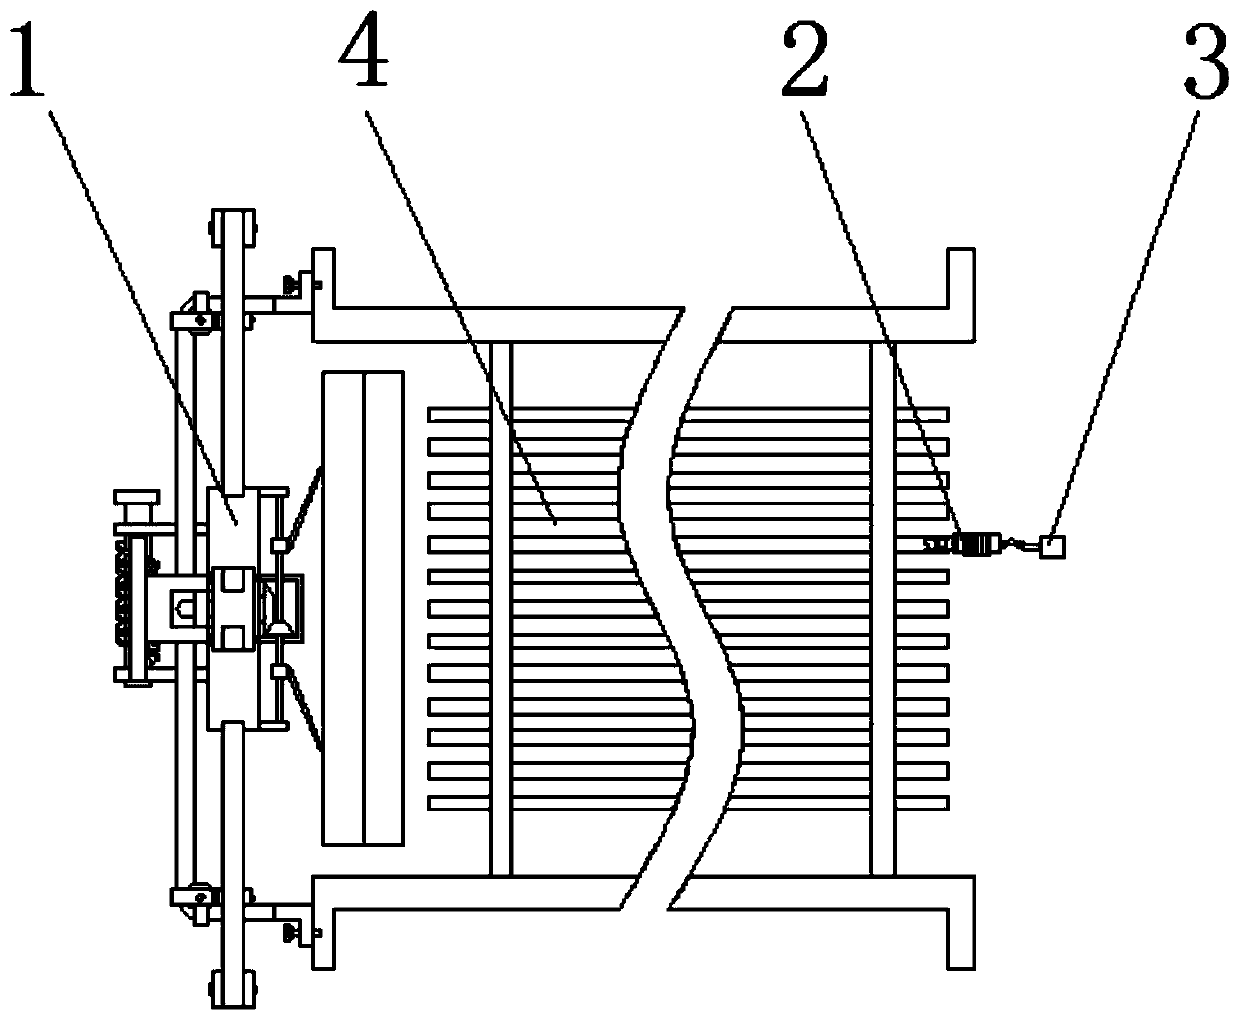 A kind of negative pressure graphite heat exchanger detection method